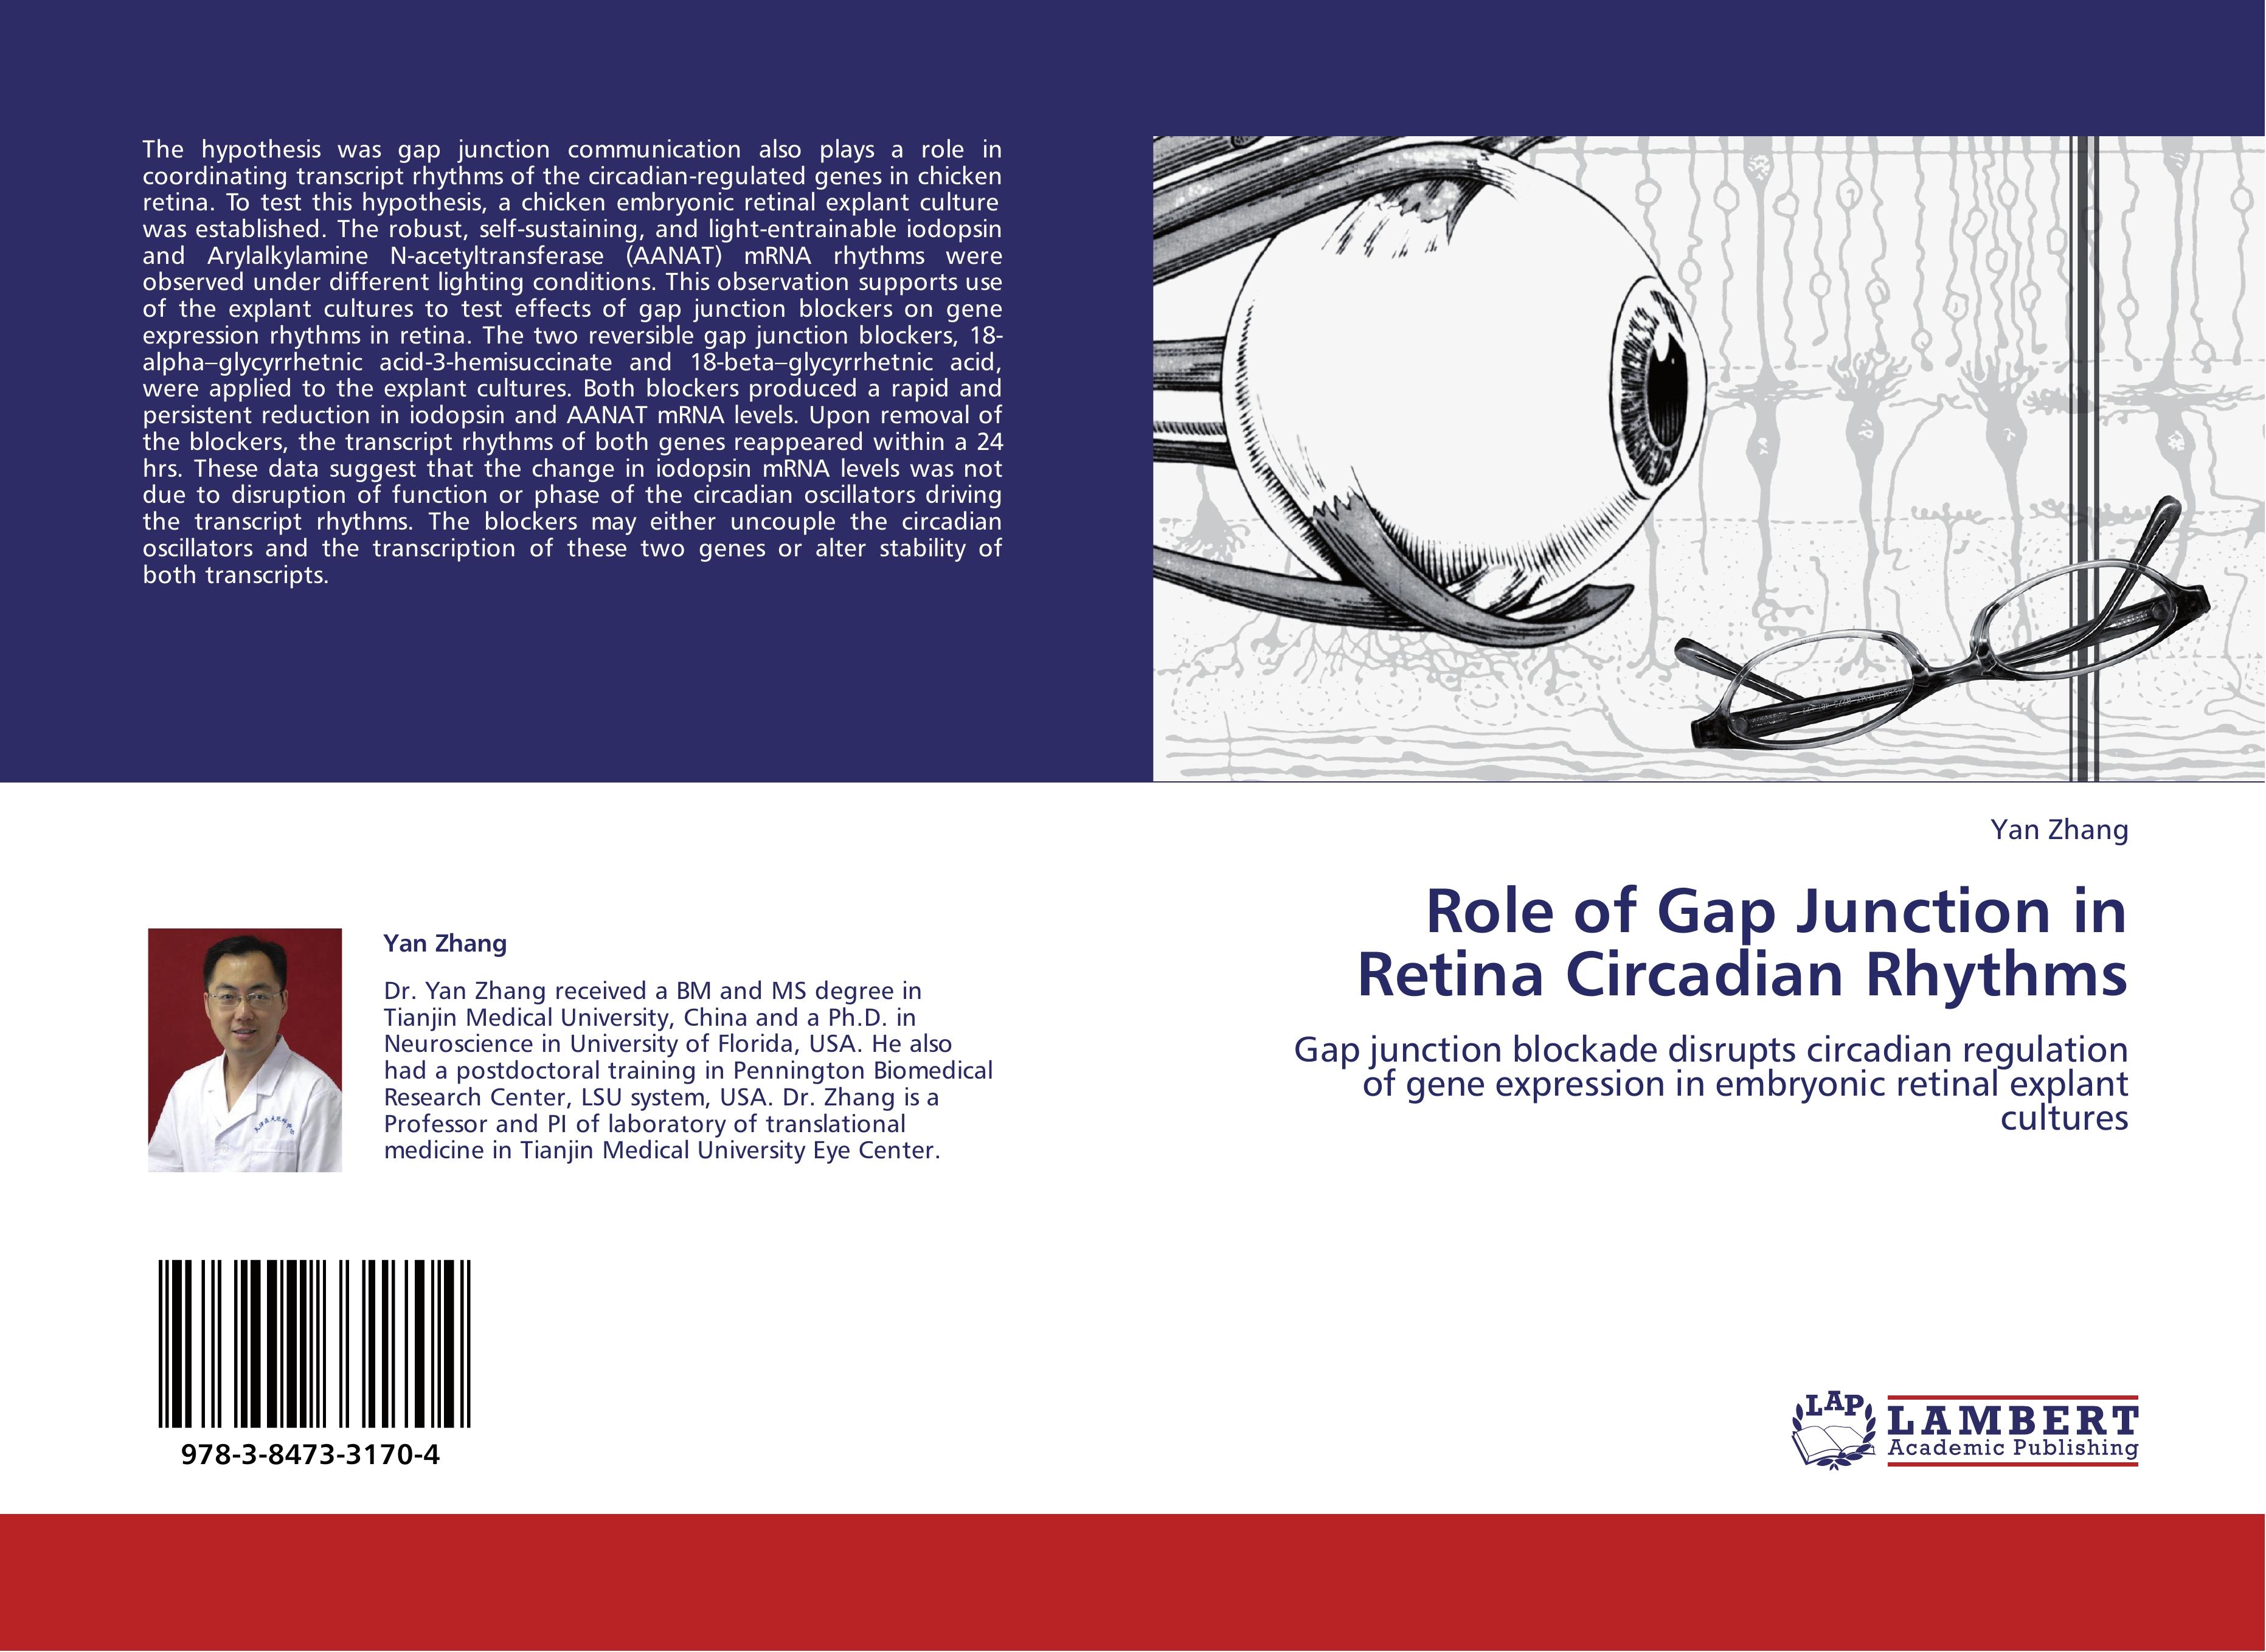 Role of Gap Junction in Retina Circadian Rhythms - Yan Zhang